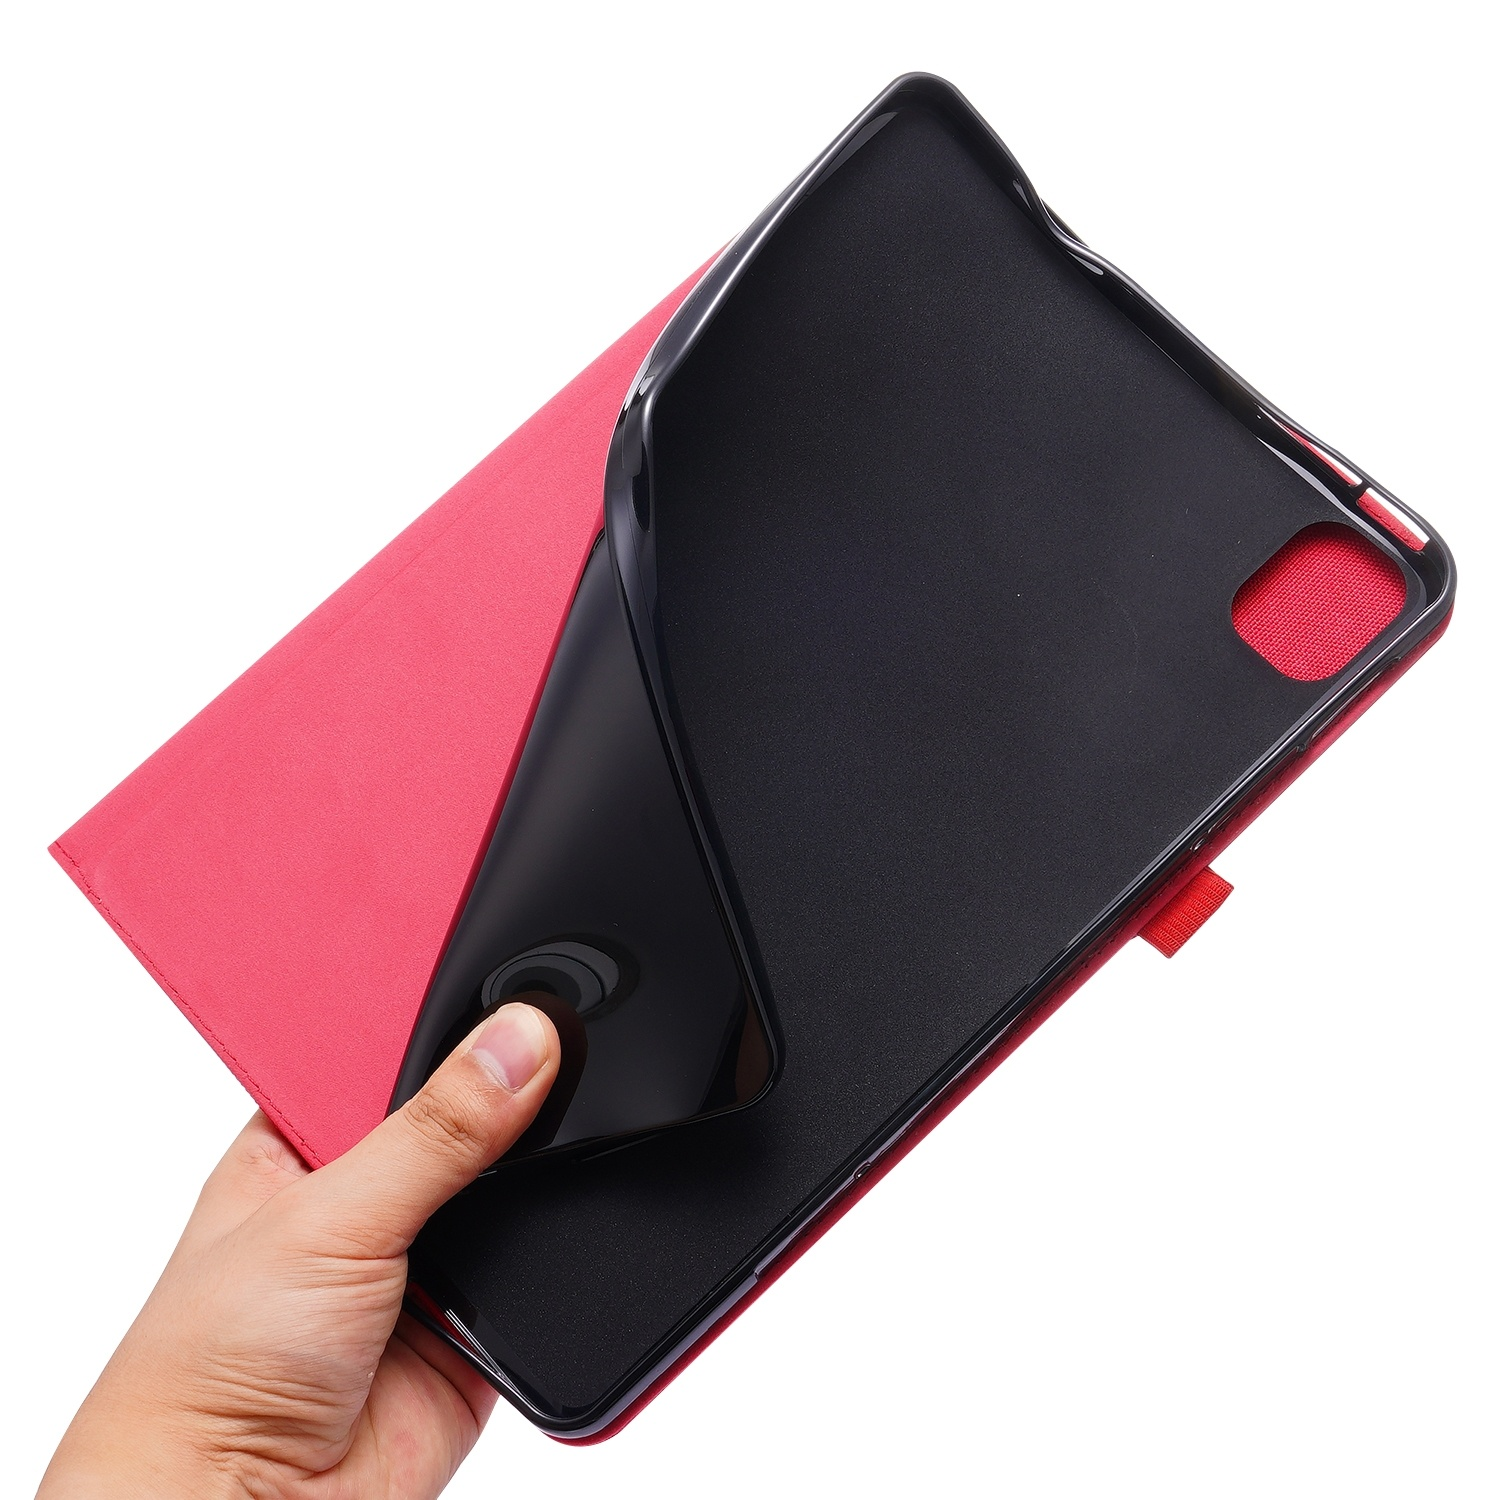 Xiaomi Tablethülle Rosa Kunstleder, für KÖNIG DESIGN Schutzhülle Bookcover